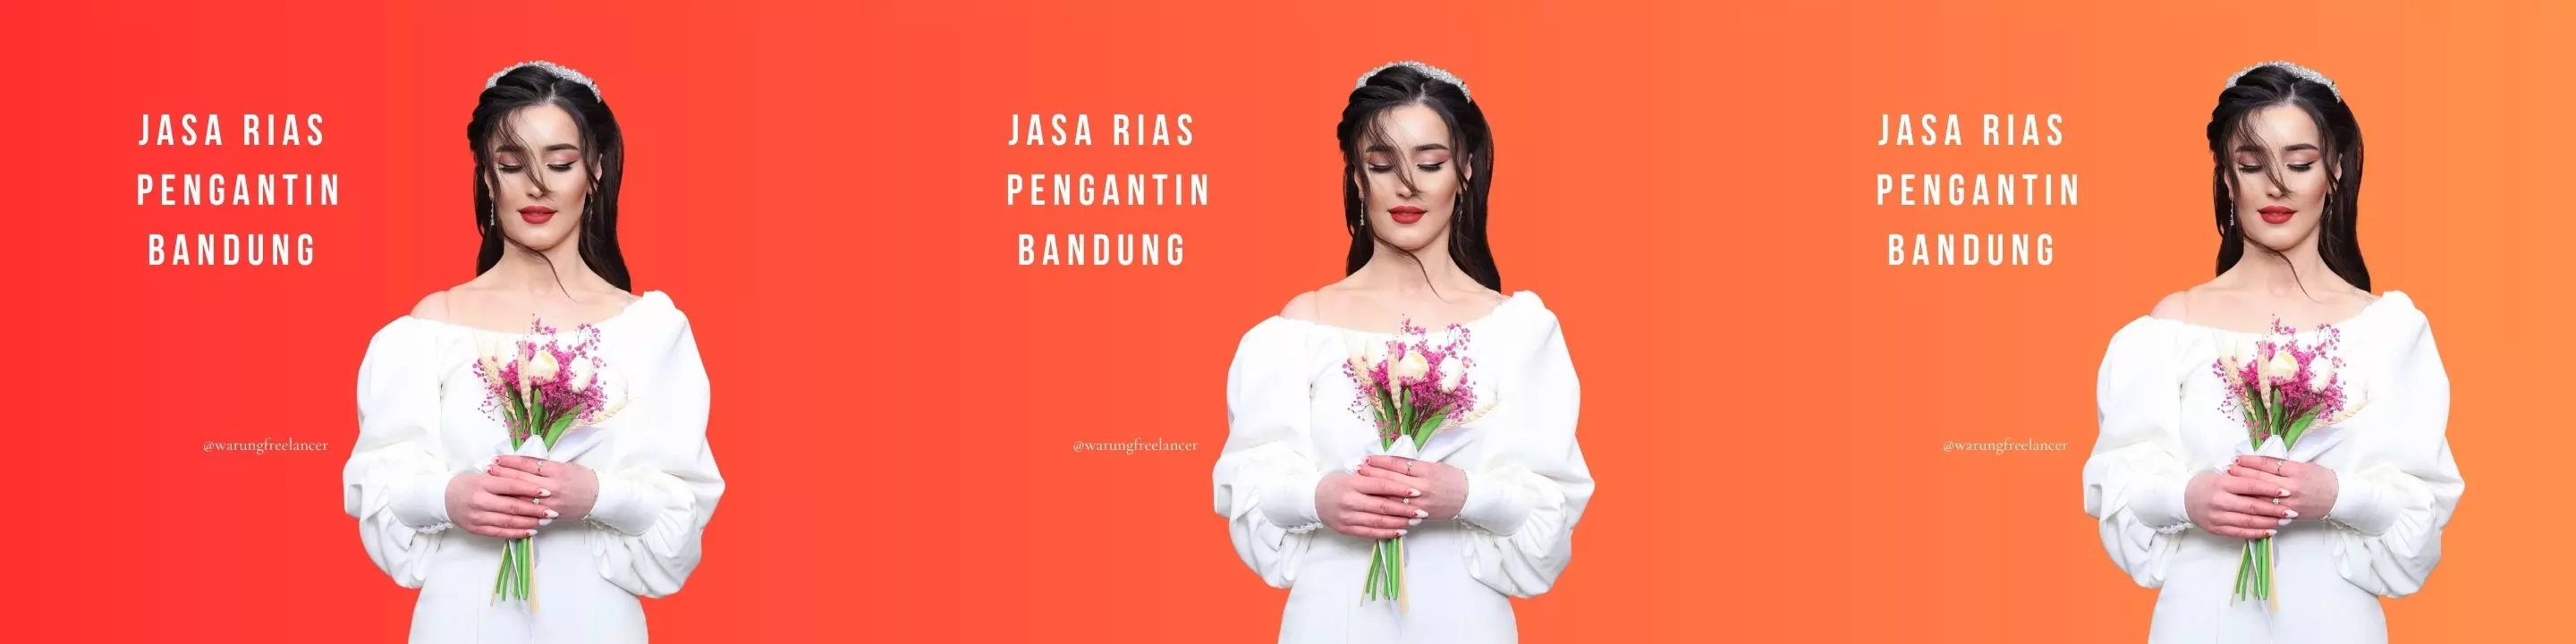 Jasa Rias Pengantin Bandung